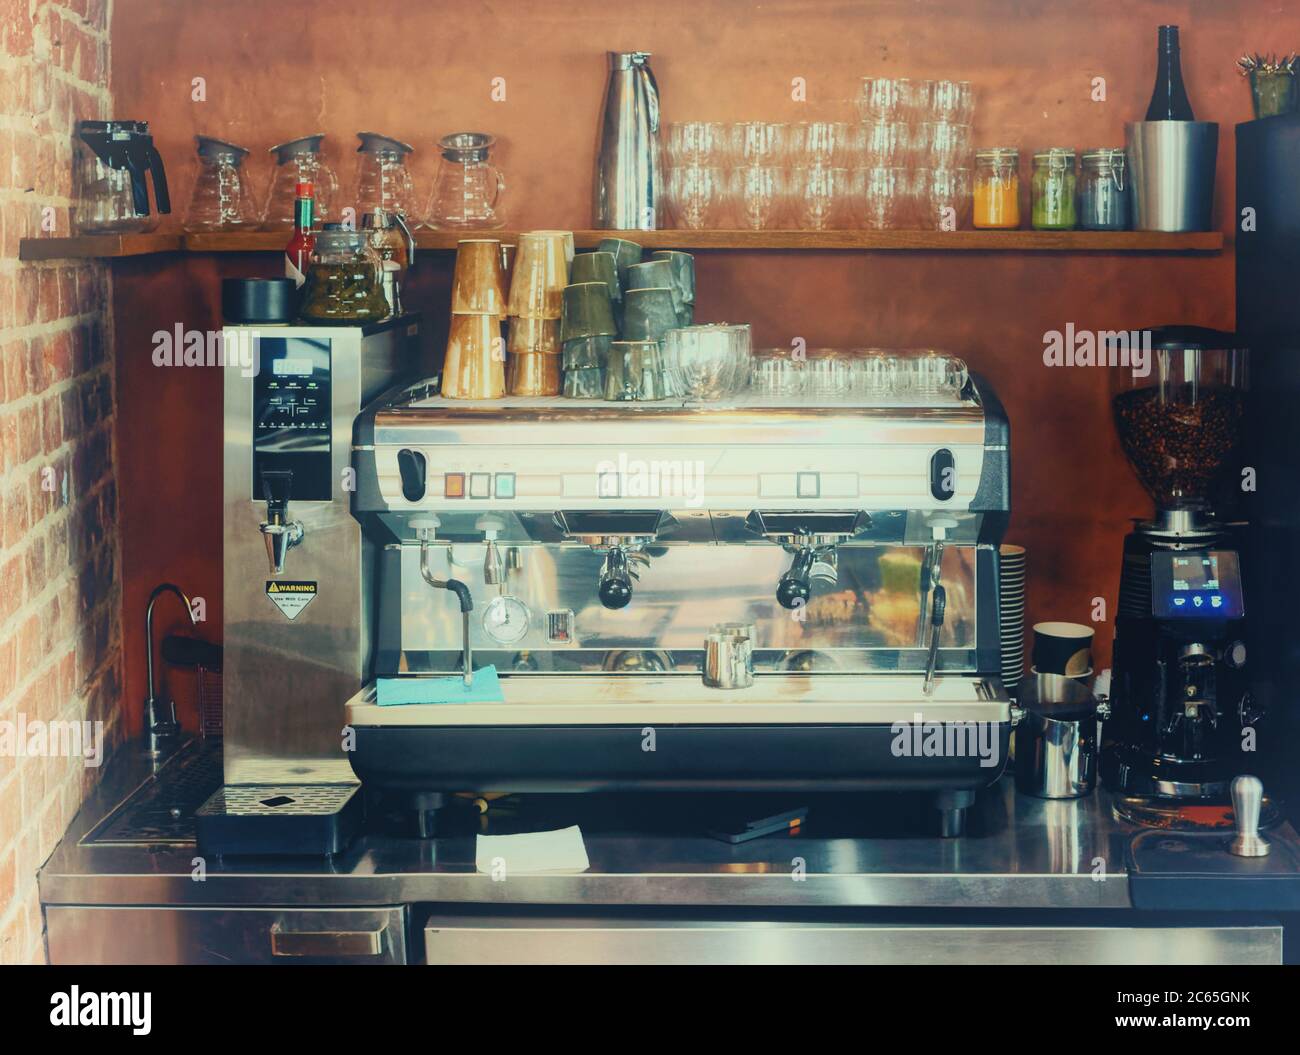 https://c8.alamy.com/comp/2C65GNK/espresso-machine-hot-water-dispenser-and-coffee-grinder-in-a-bar-toned-2C65GNK.jpg